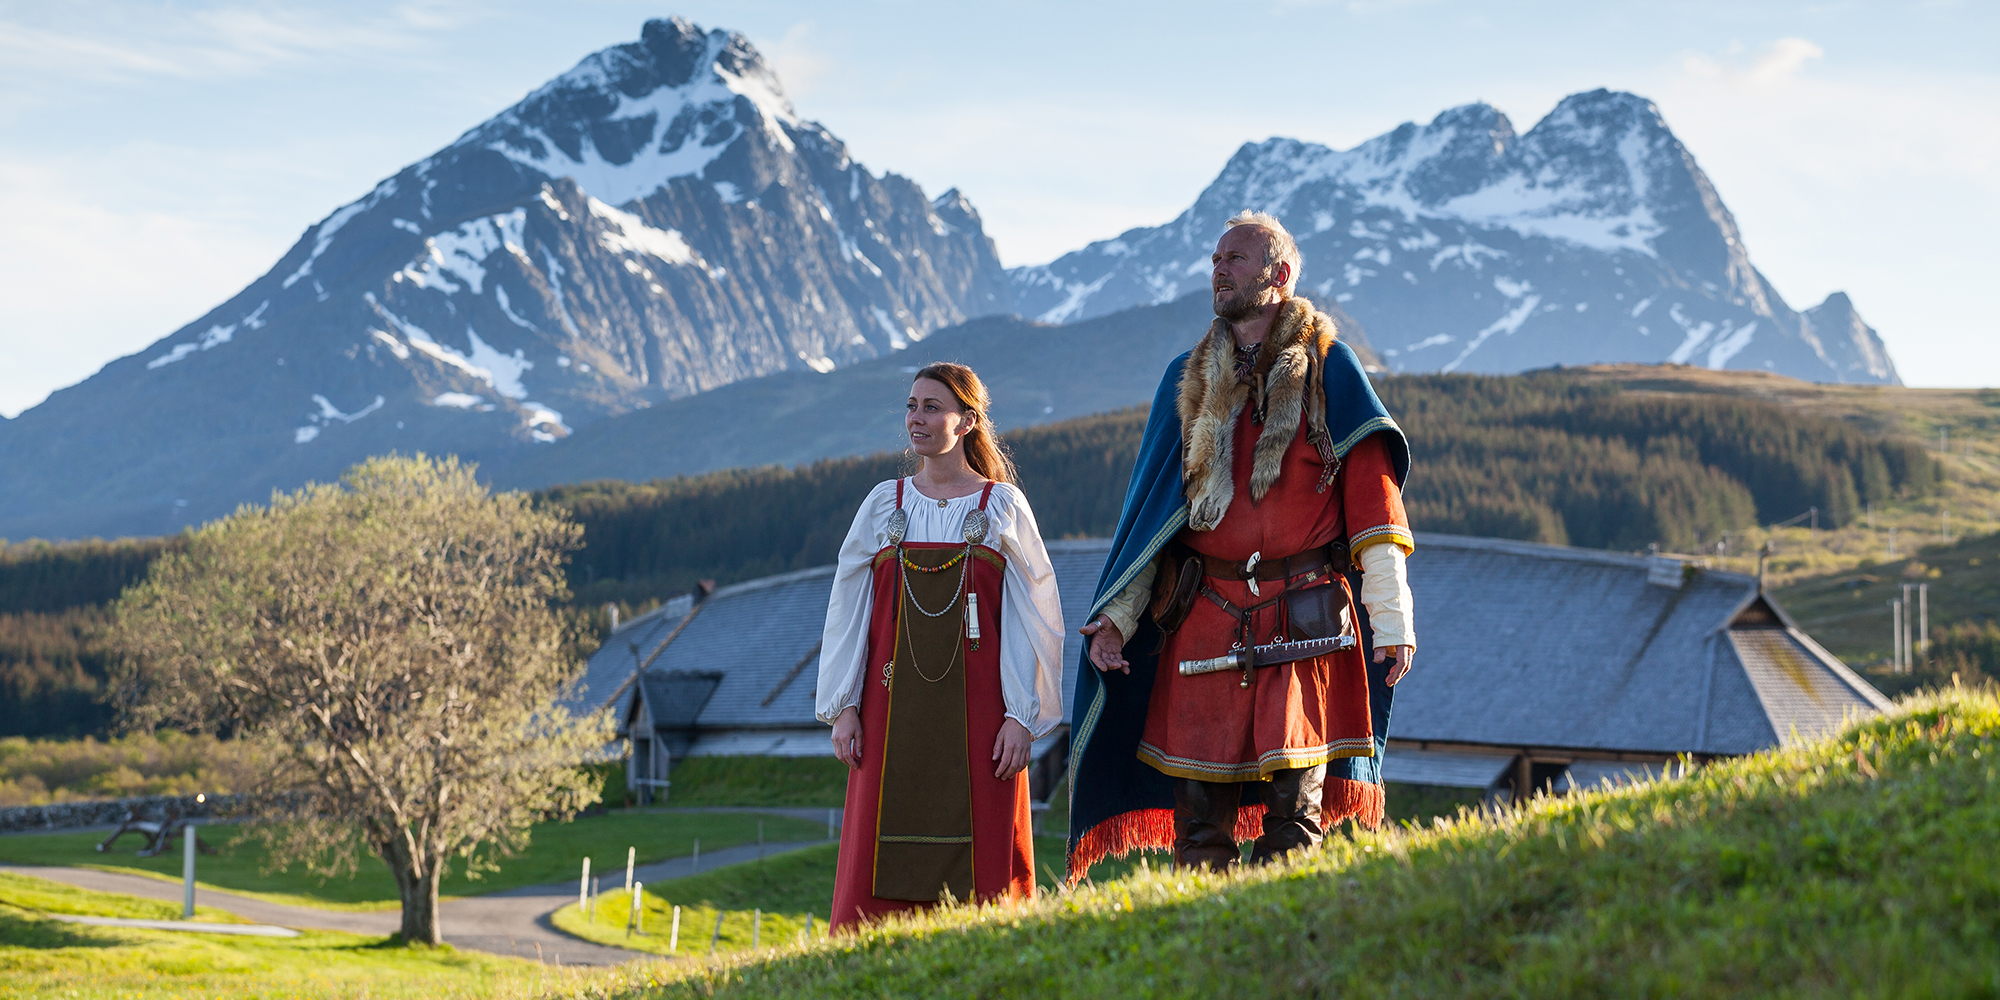 norwegian vikings